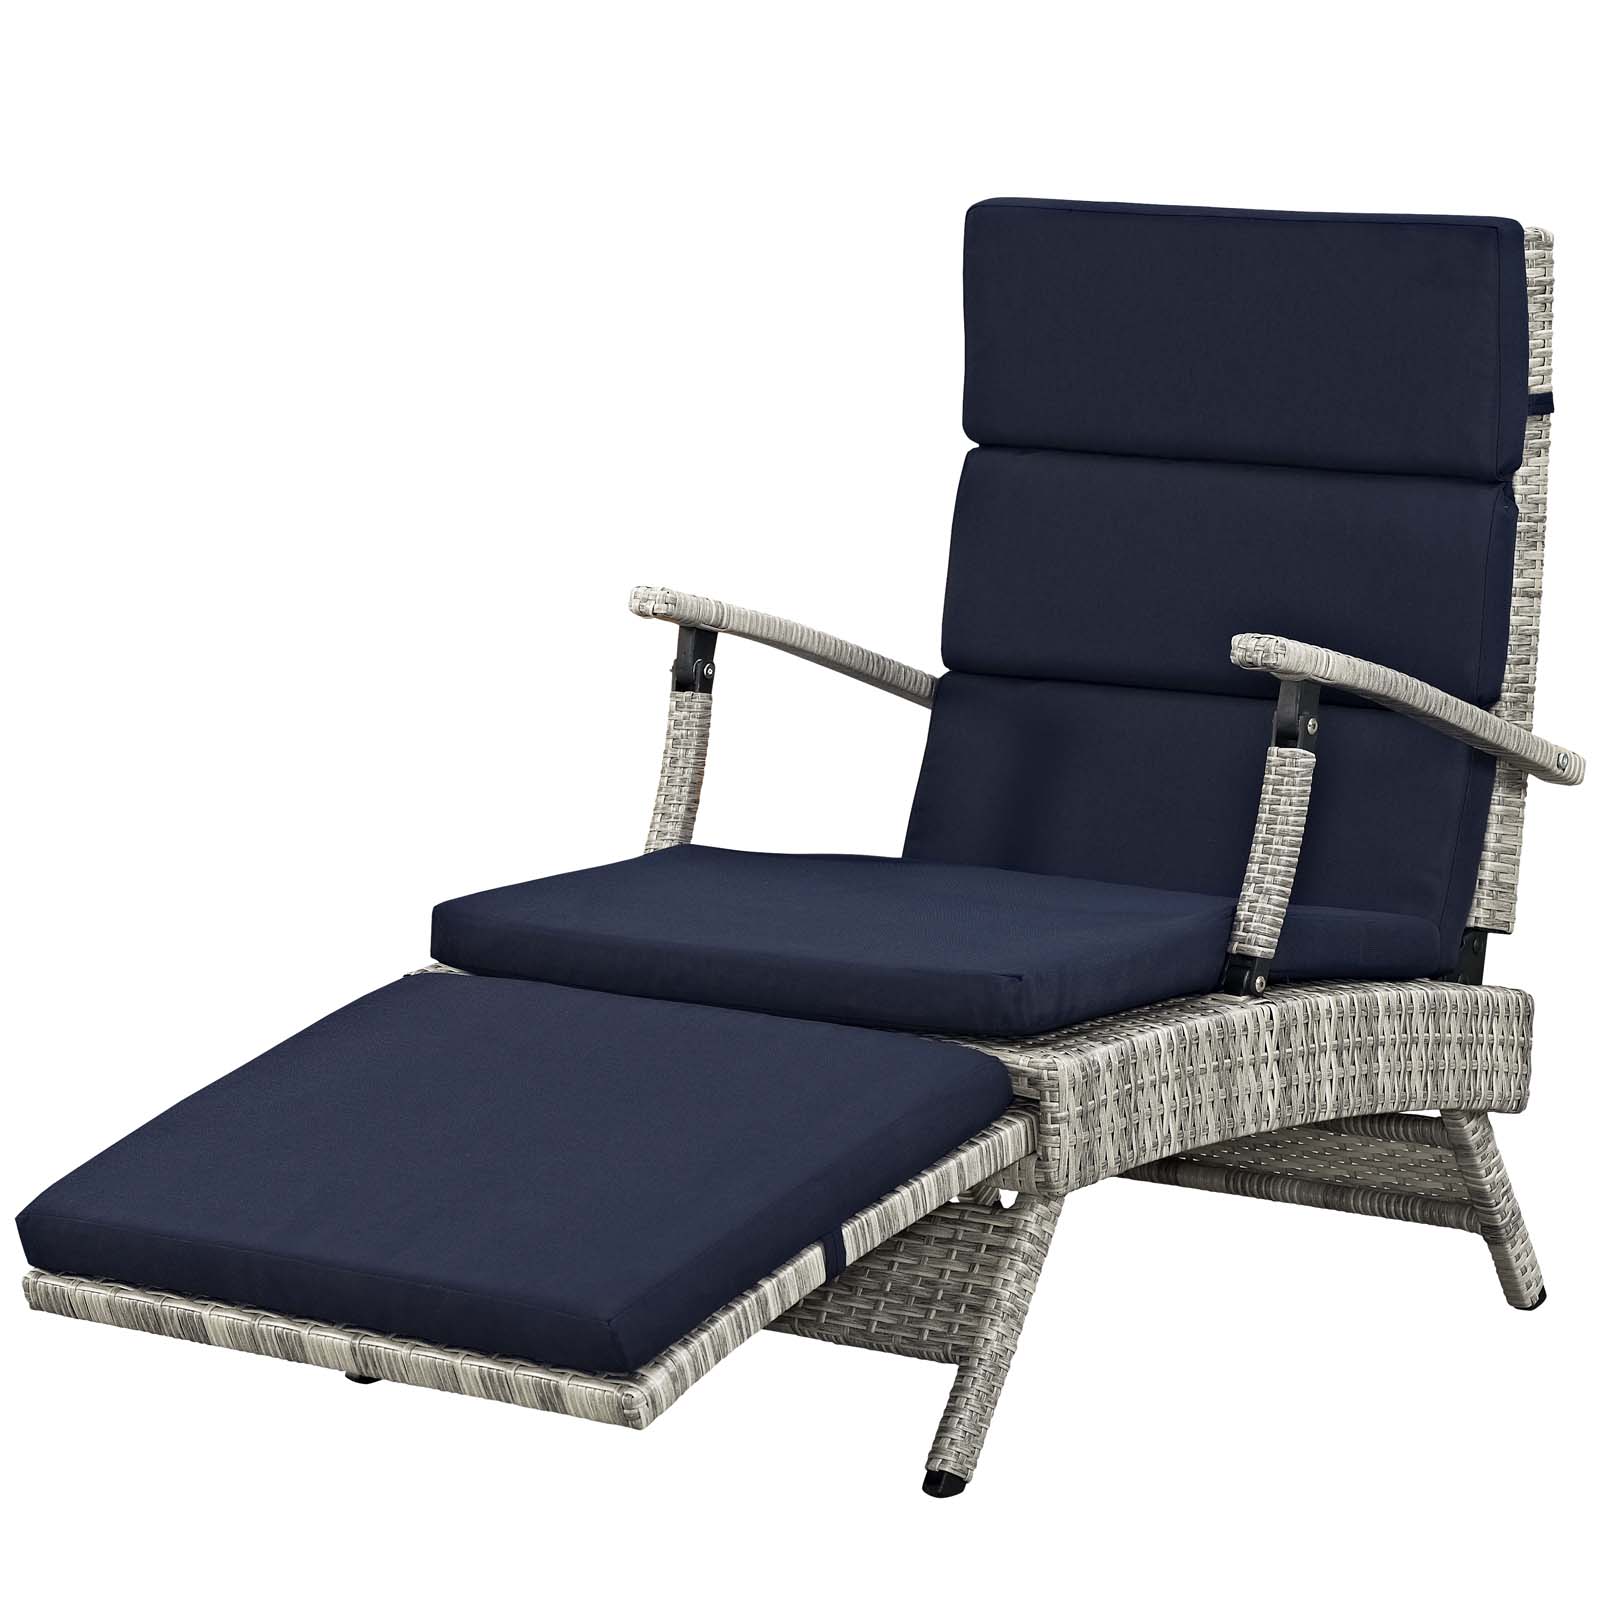 Contemporary Modern Urban Designer Outdoor Patio Balcony Garden Furniture Lounge Chair Chaise, Fabric Rattan Wicker, Navy Blue - image 1 of 9